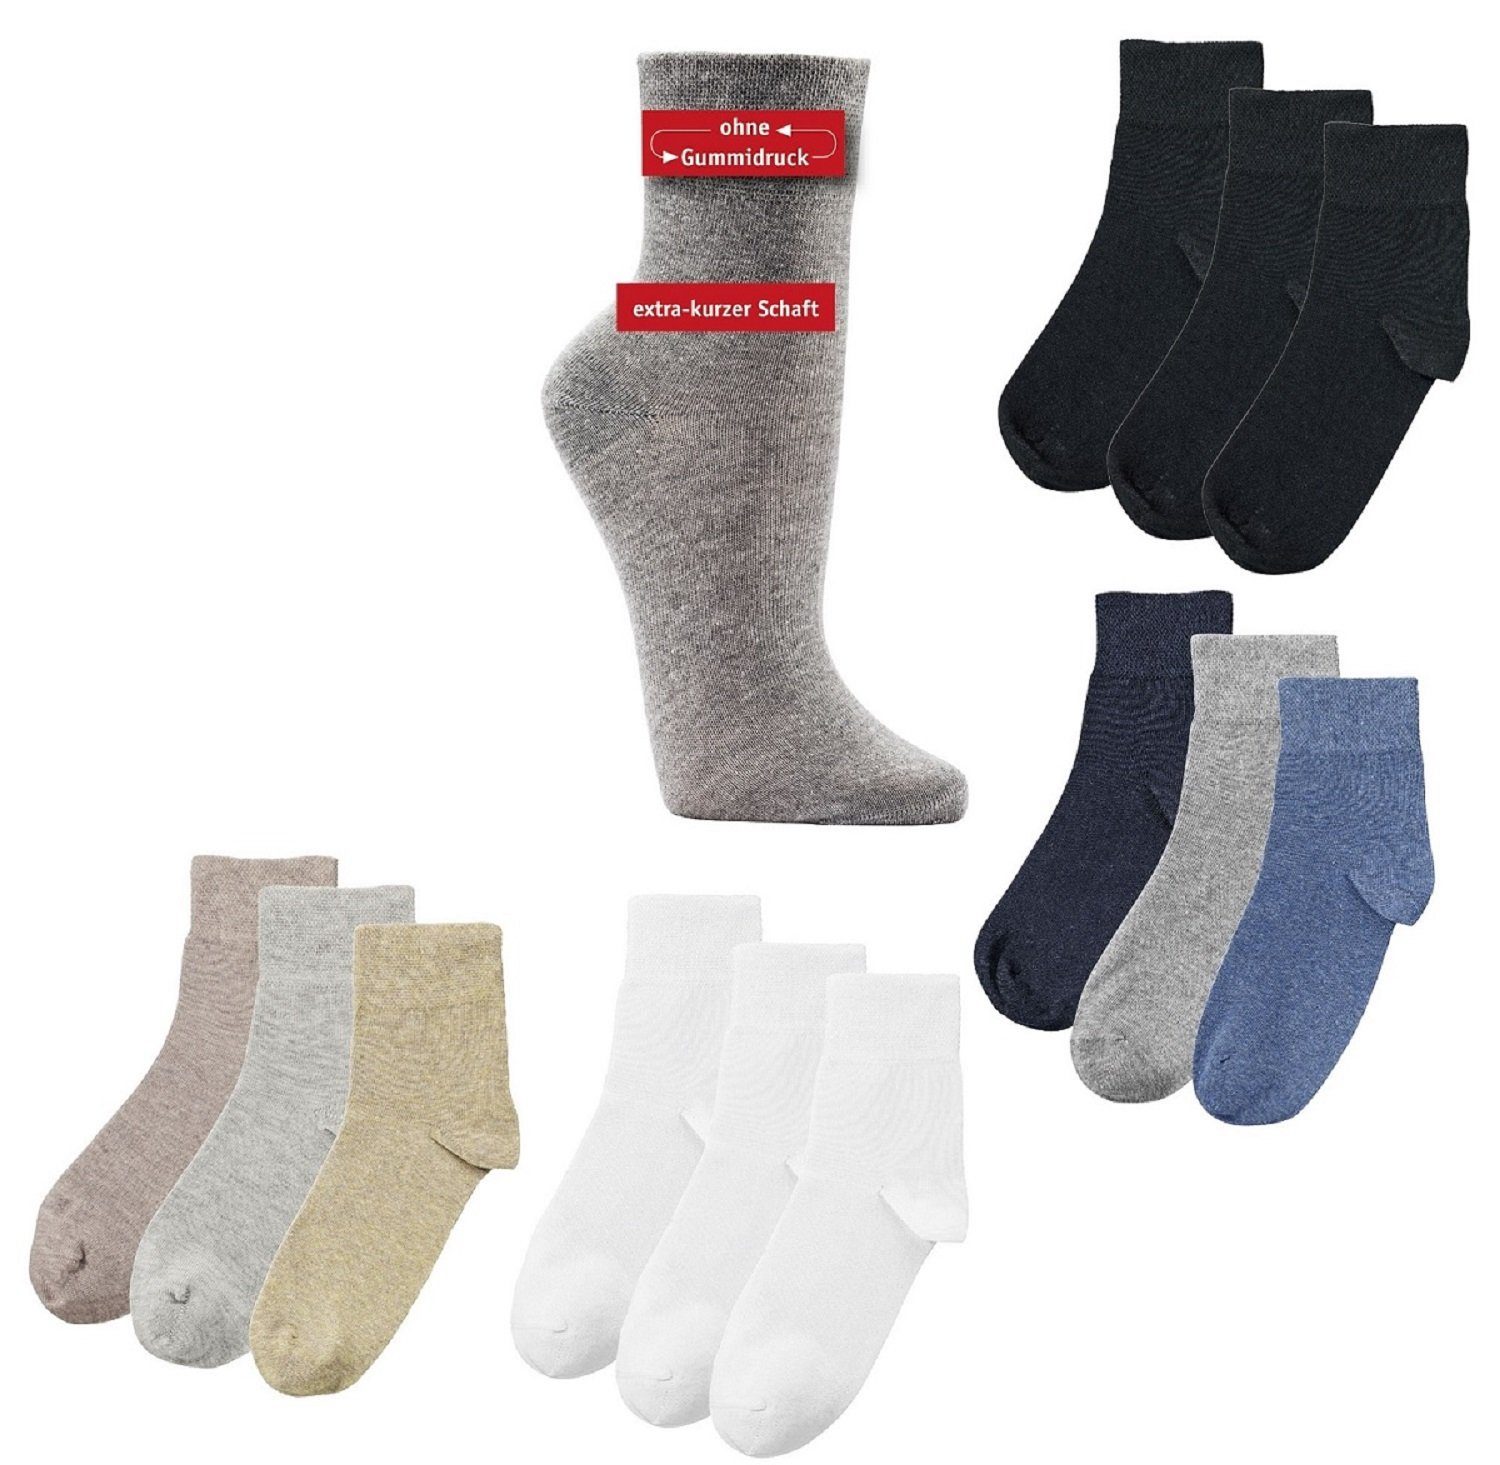 Socks 4 Fun Diabetikersocken Wellness Kurzschaft Baumwolle (3-Paar, 3 Paar) dunkel sortiert